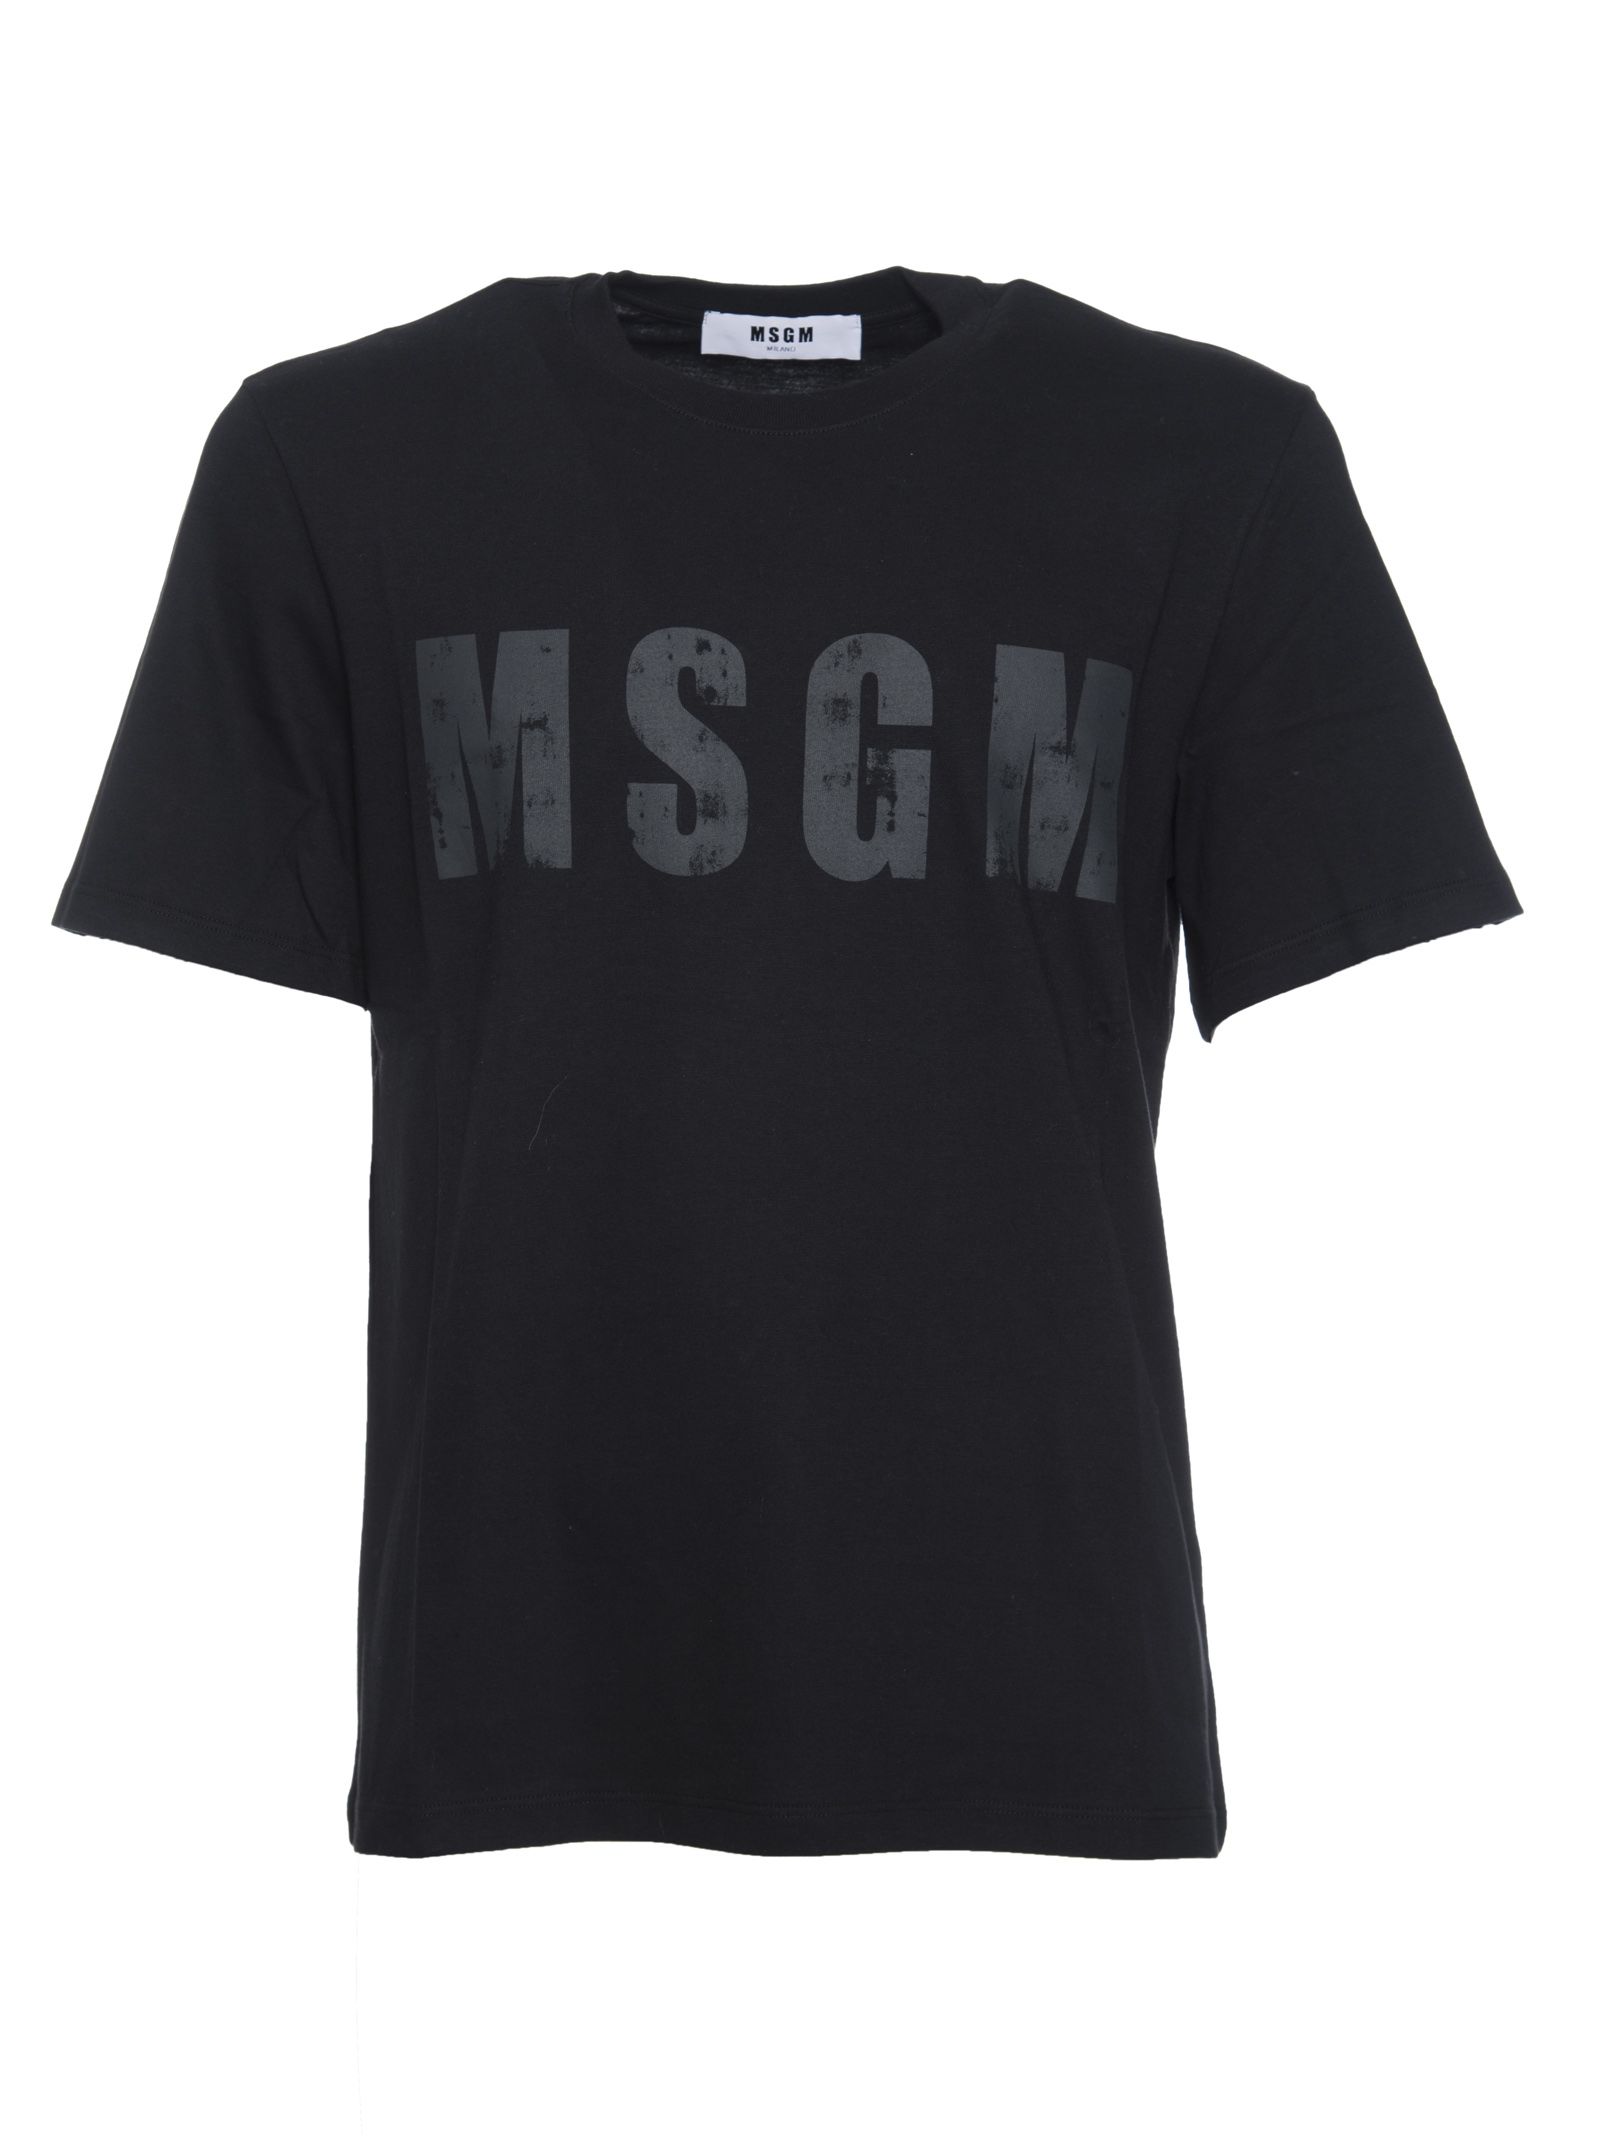 MSGM - MSGM Logo T-Shirt - Black, Men's Short Sleeve T-Shirts | Italist